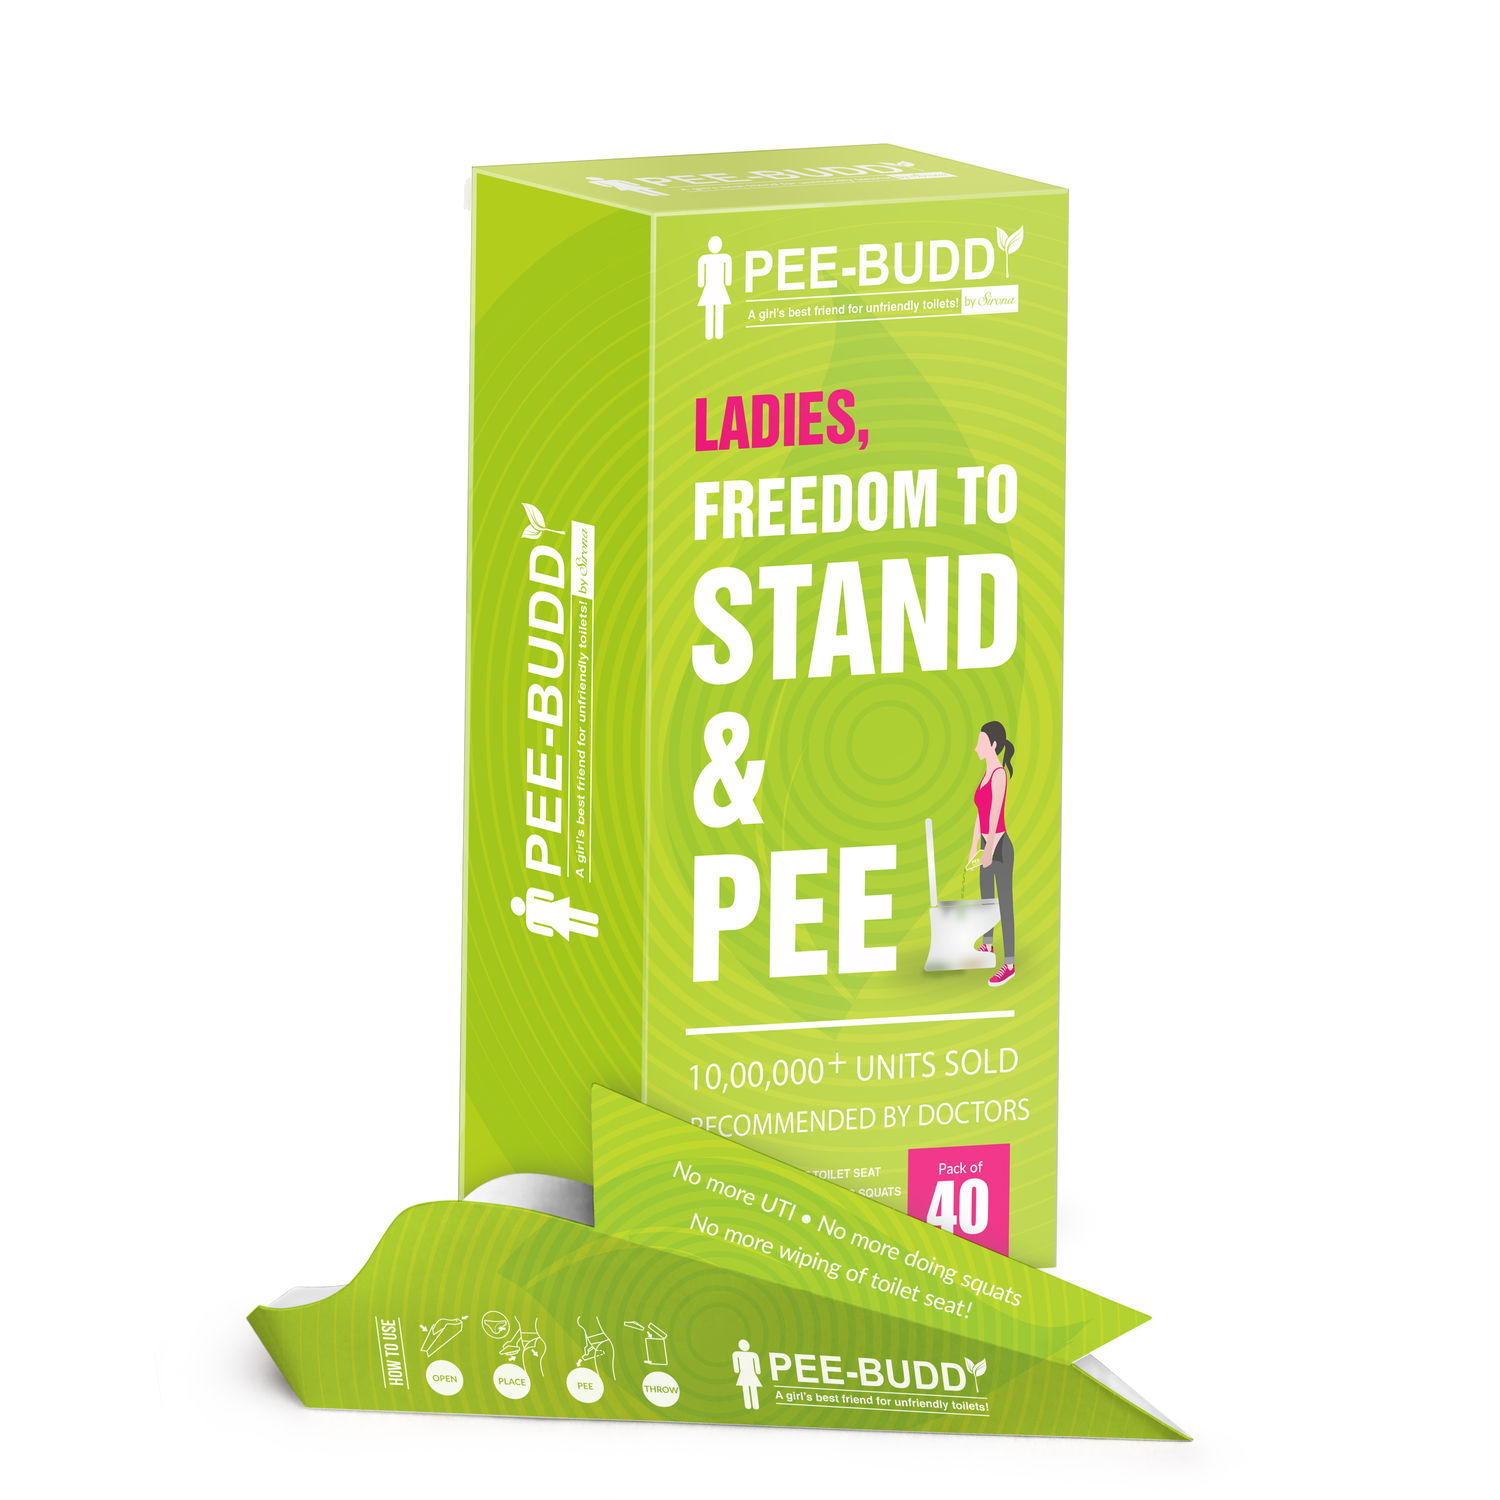 Peebuddy - Reusable Portable Female Urination Device - Pack of 2